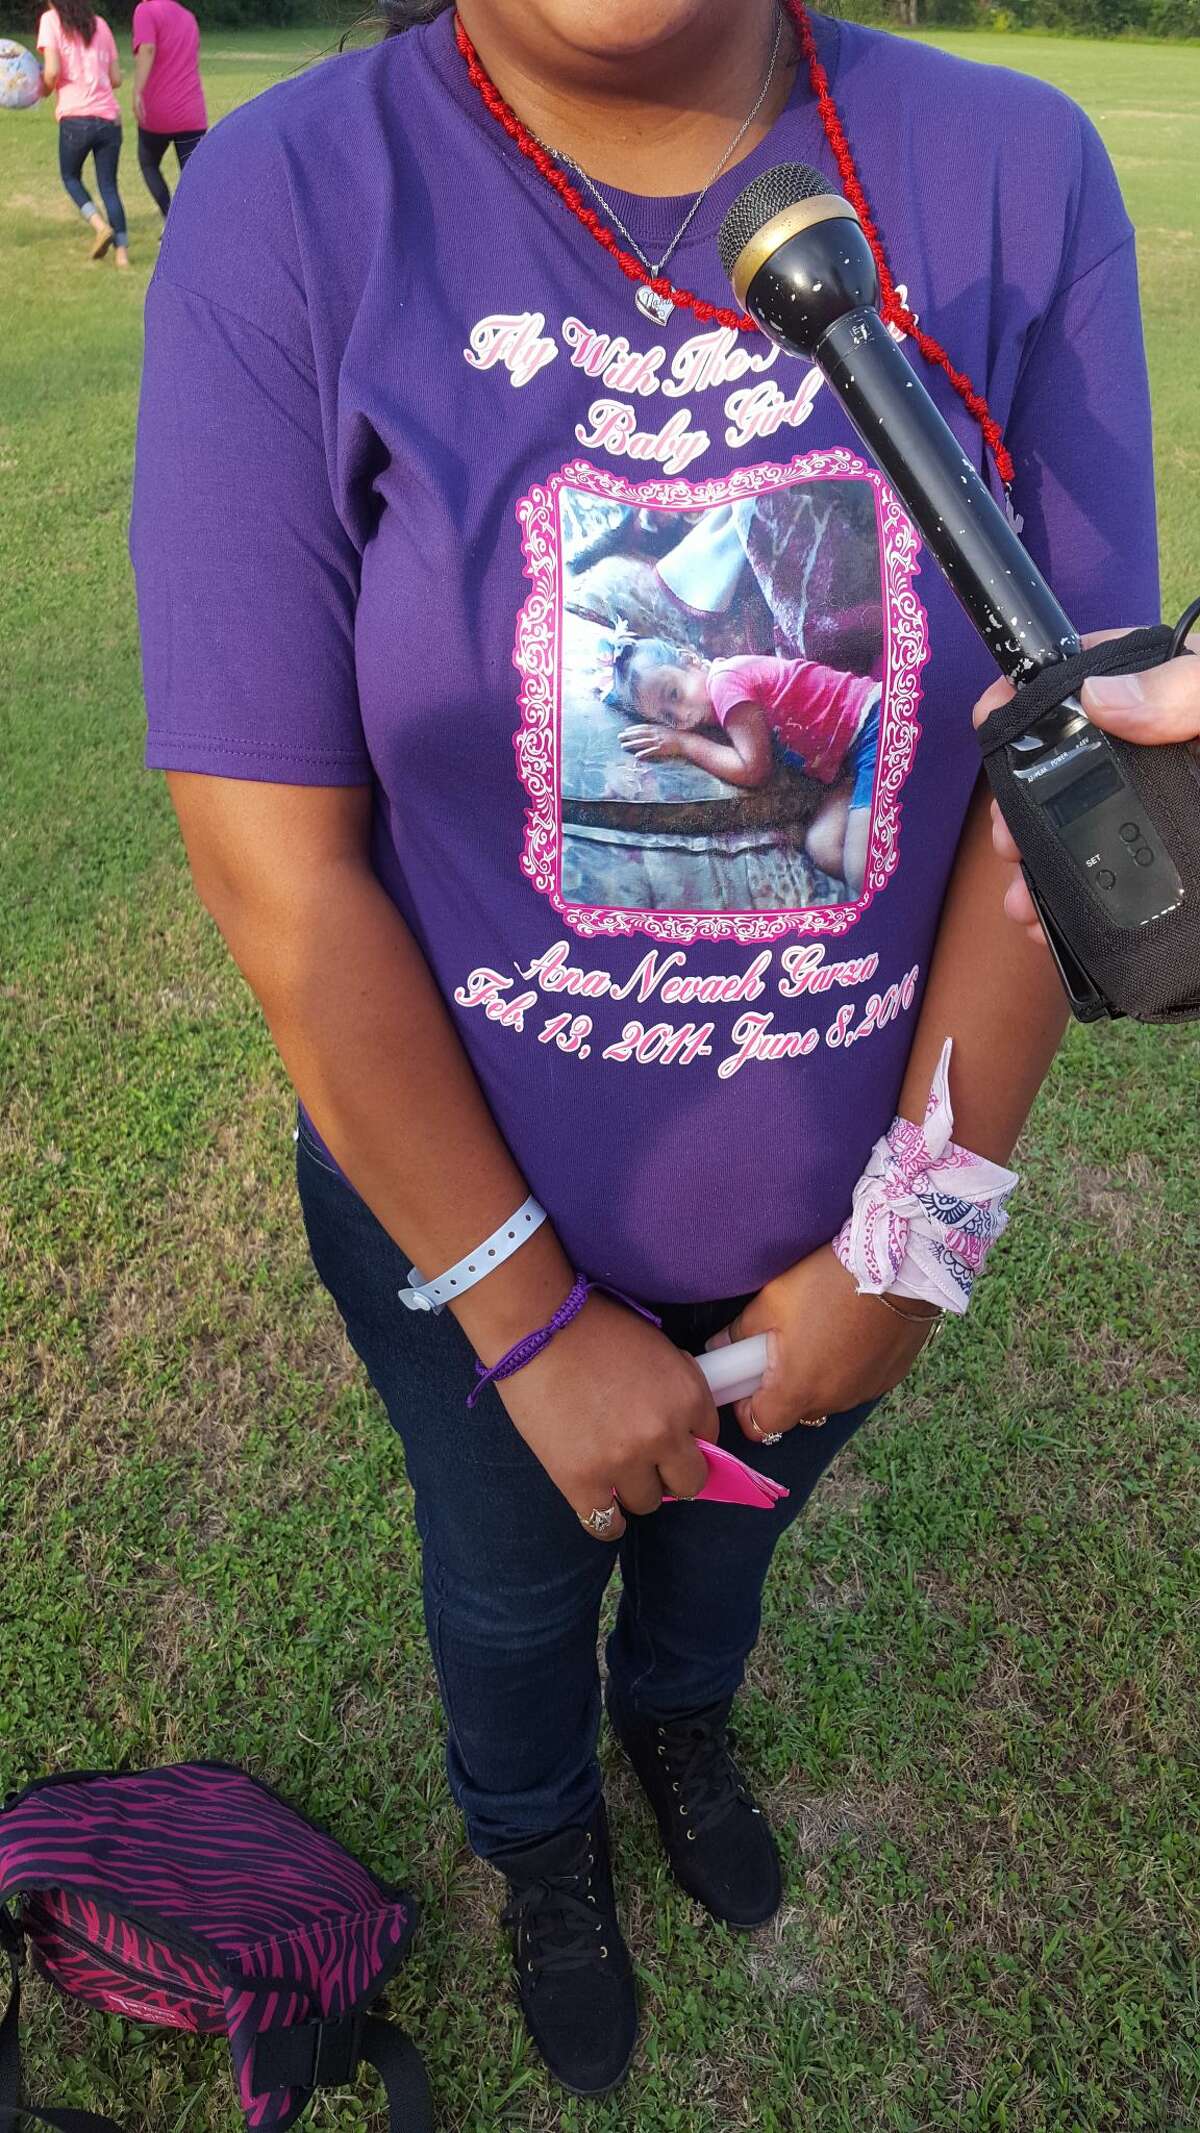 Family members wore memorial t-shirts to honor Garza.